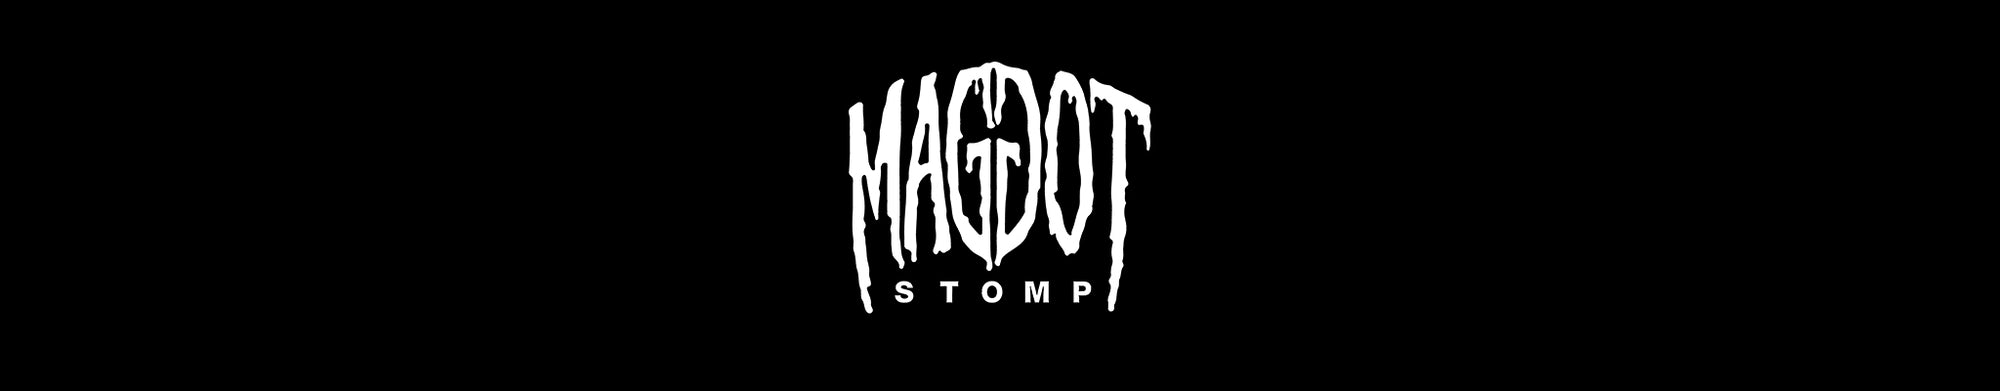 MAGGOT STOMP